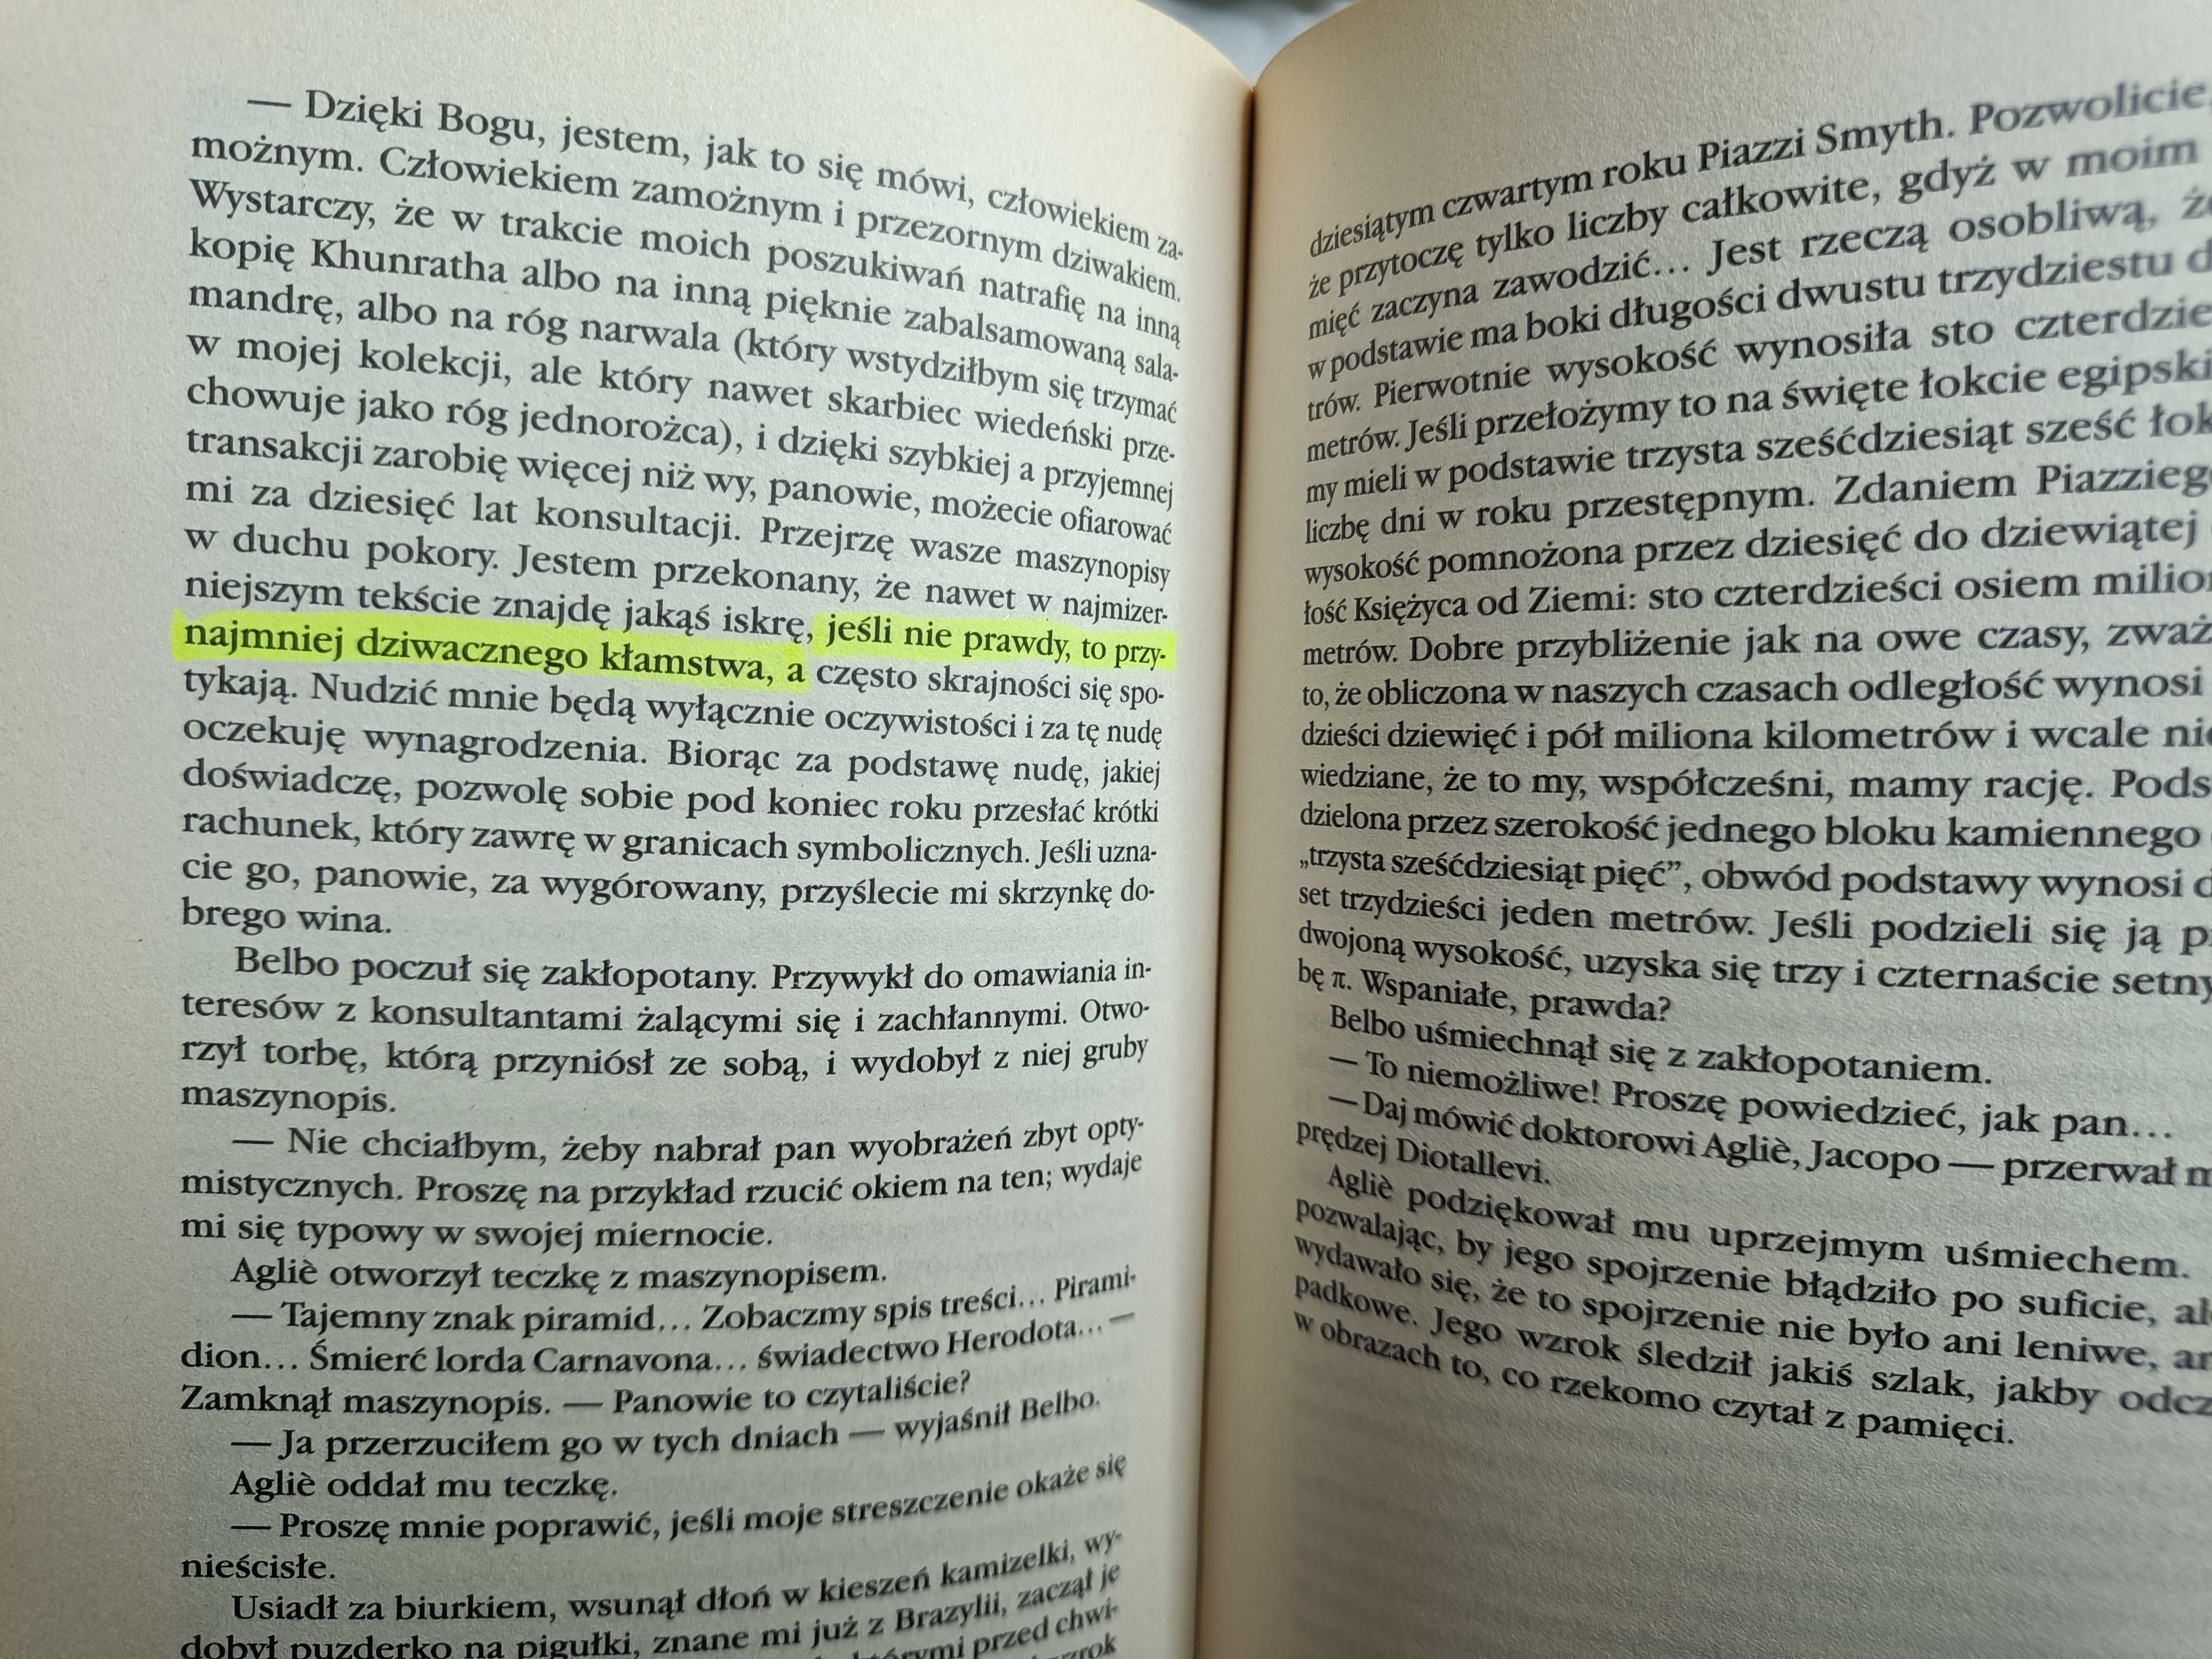 Umberto Eco - "Wahadło Foucaulta"